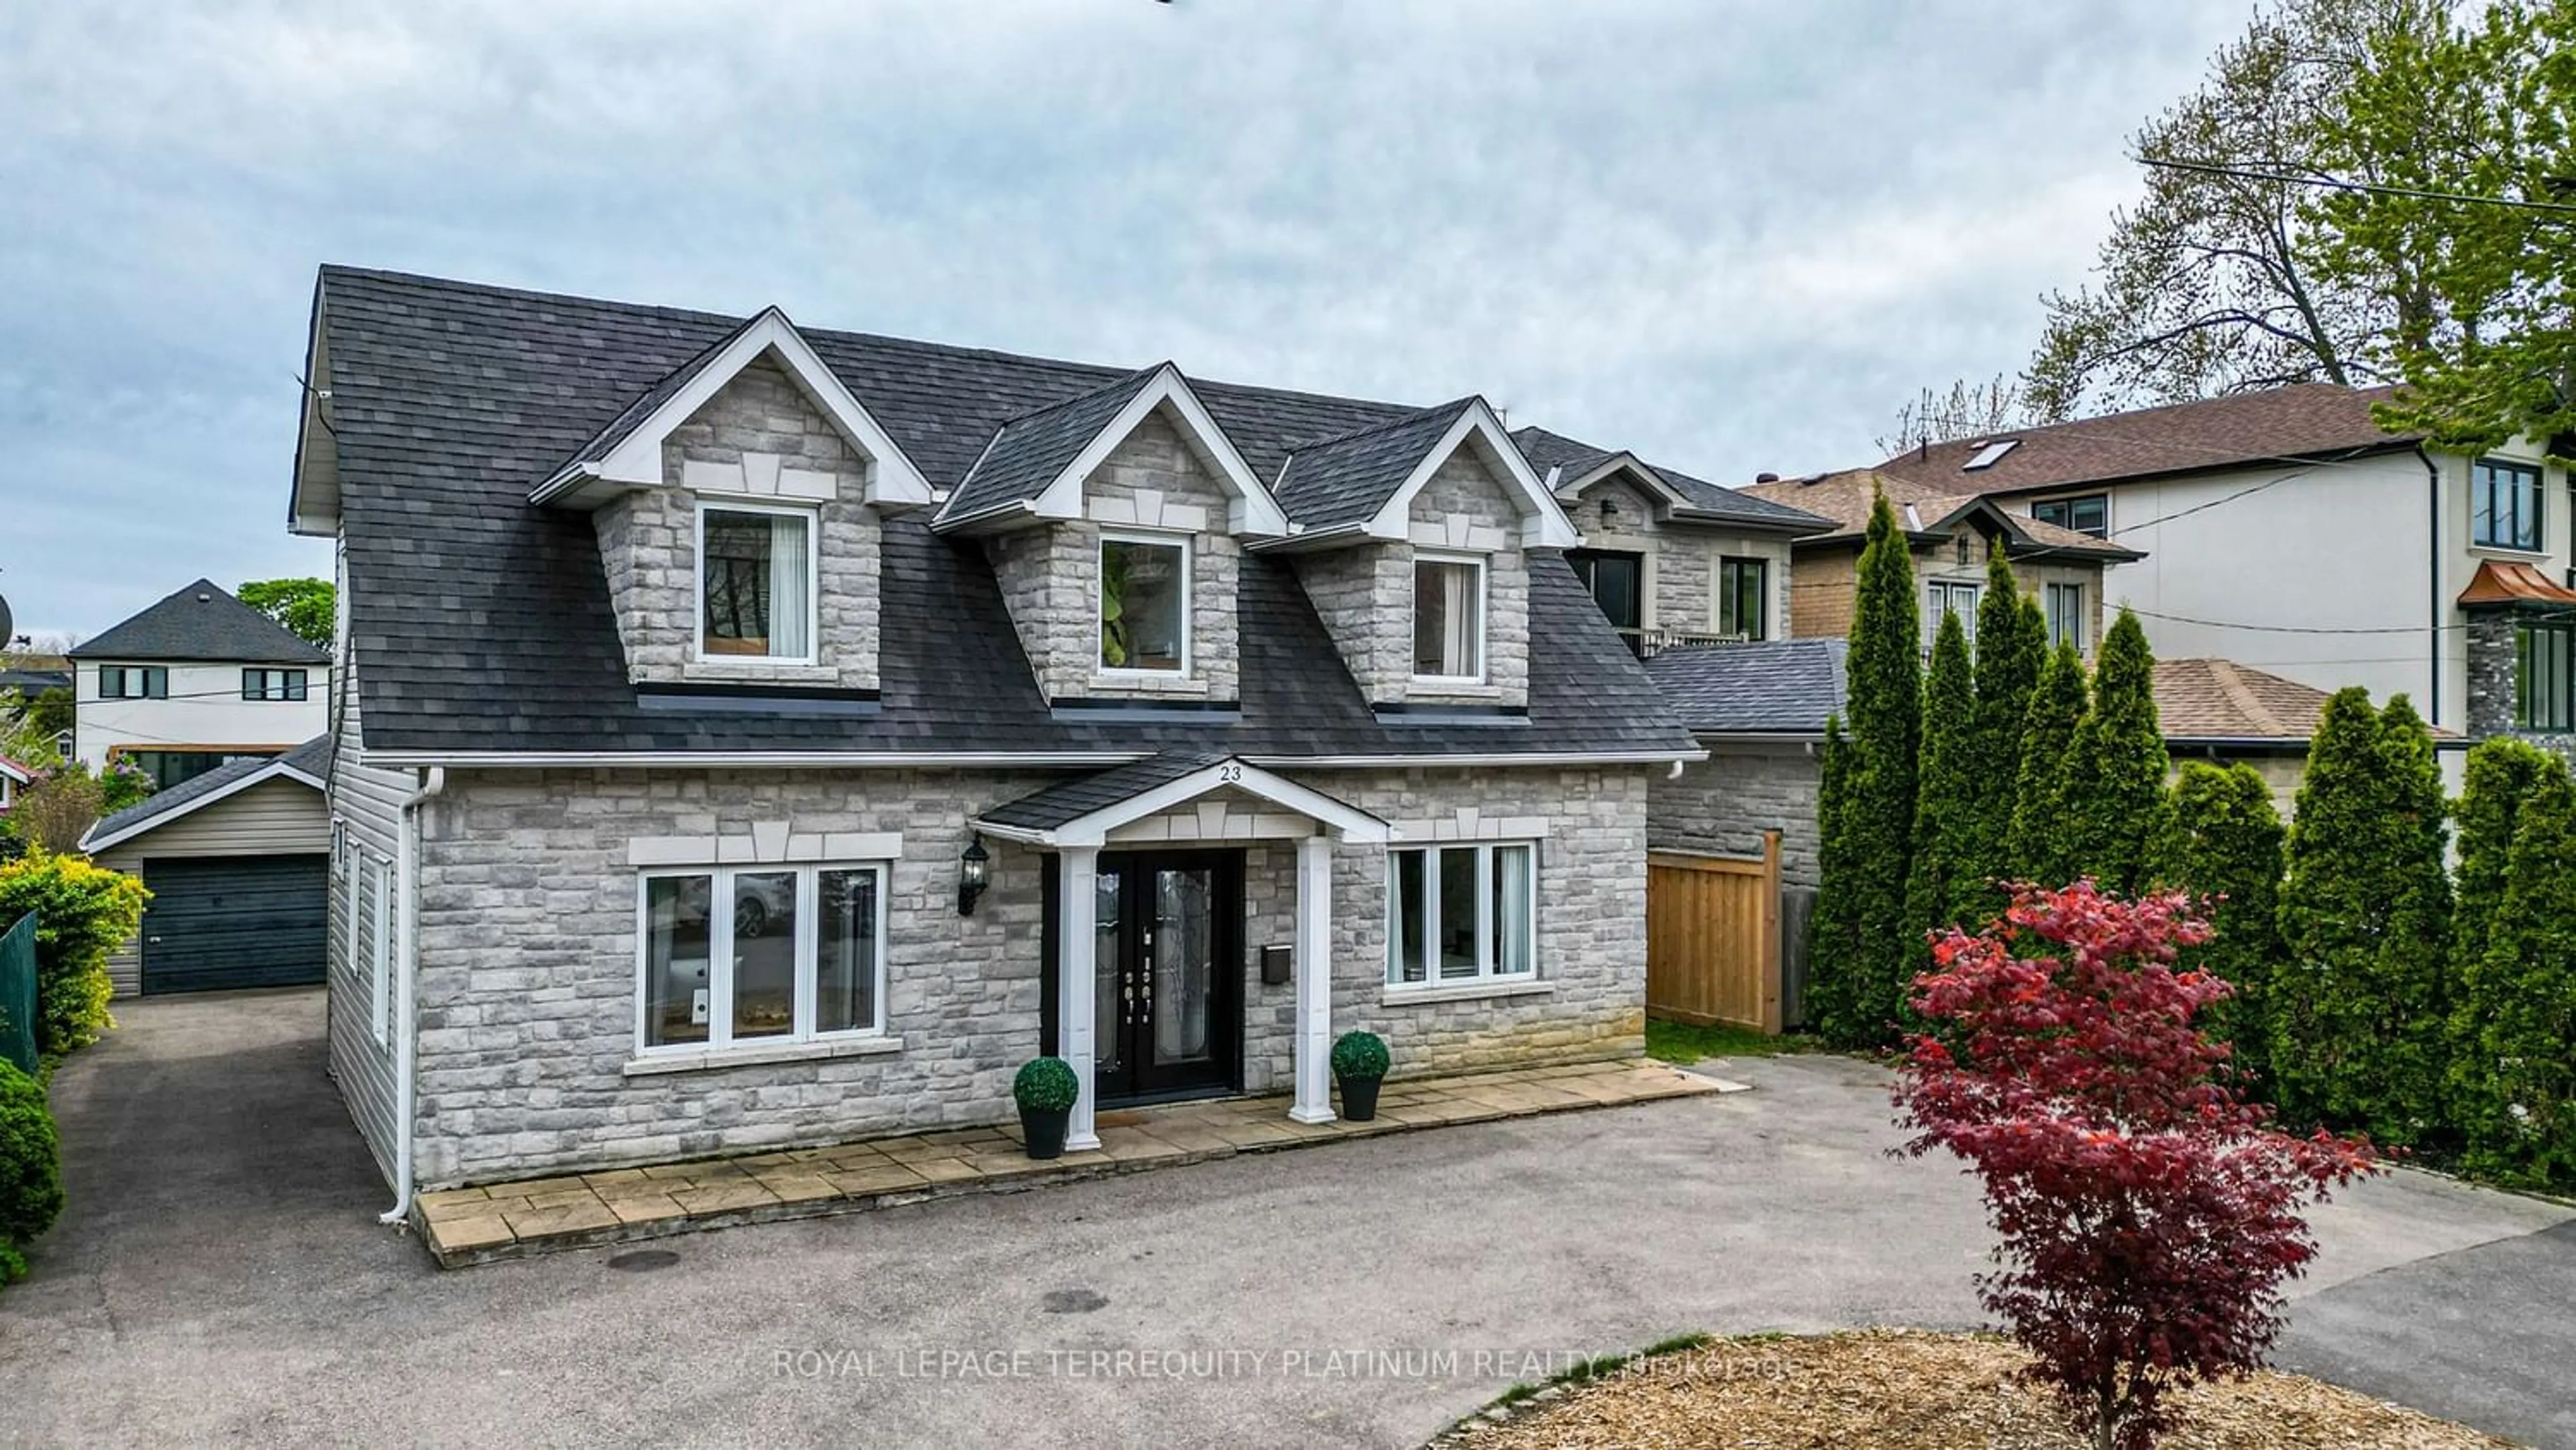 Home with brick exterior material for 23 Carnation Ave, Toronto Ontario M8V 2J8